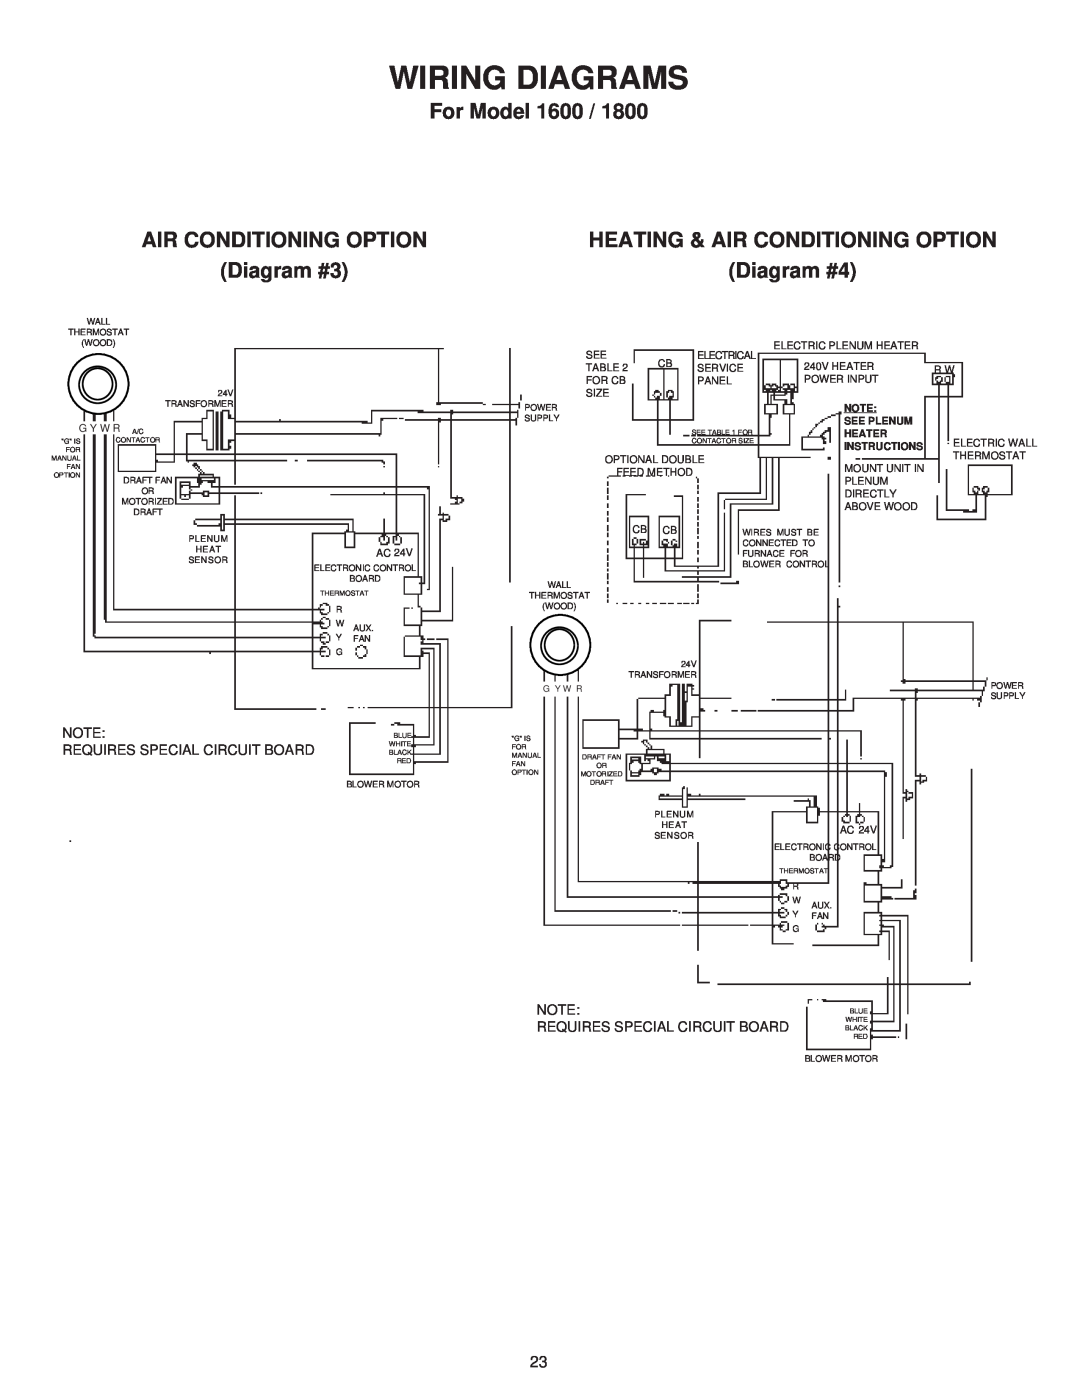 United States Stove 1600 Wiring Diagrams, AIR CONDITIONING OPTION Diagram #3, HEATING & AIR CONDITIONING OPTION Diagram #4 